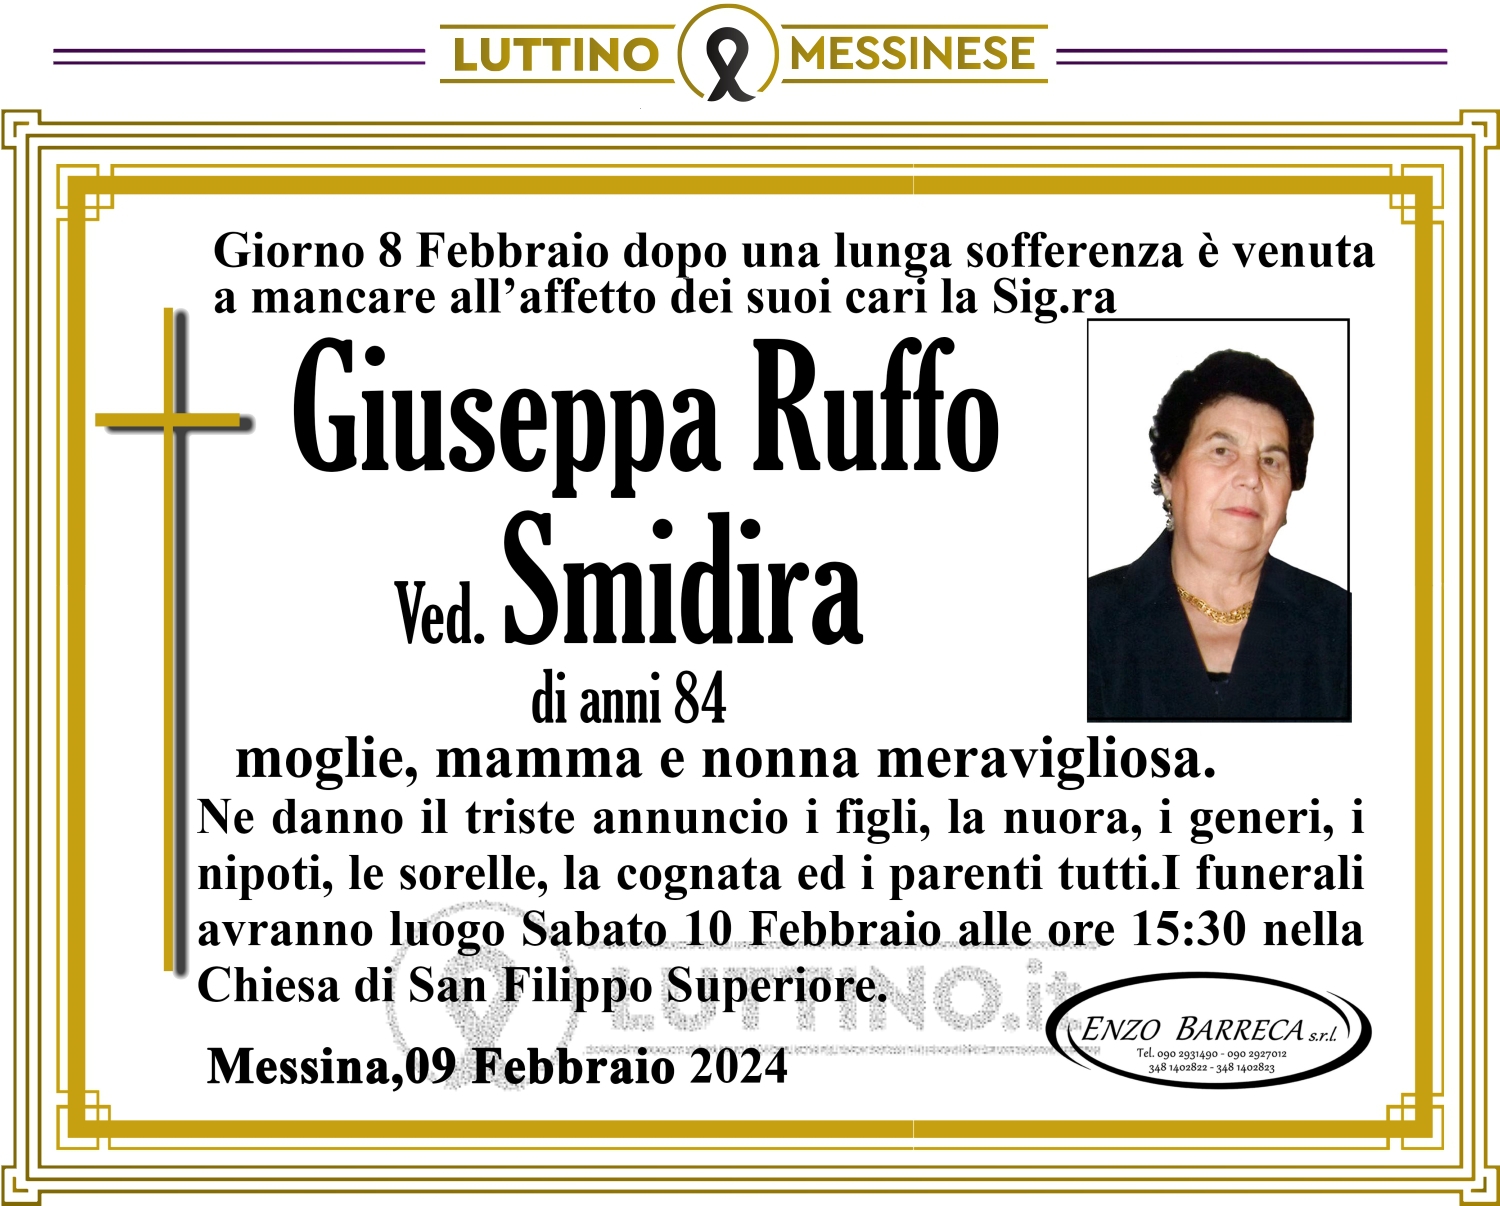 Giuseppa Ruffo